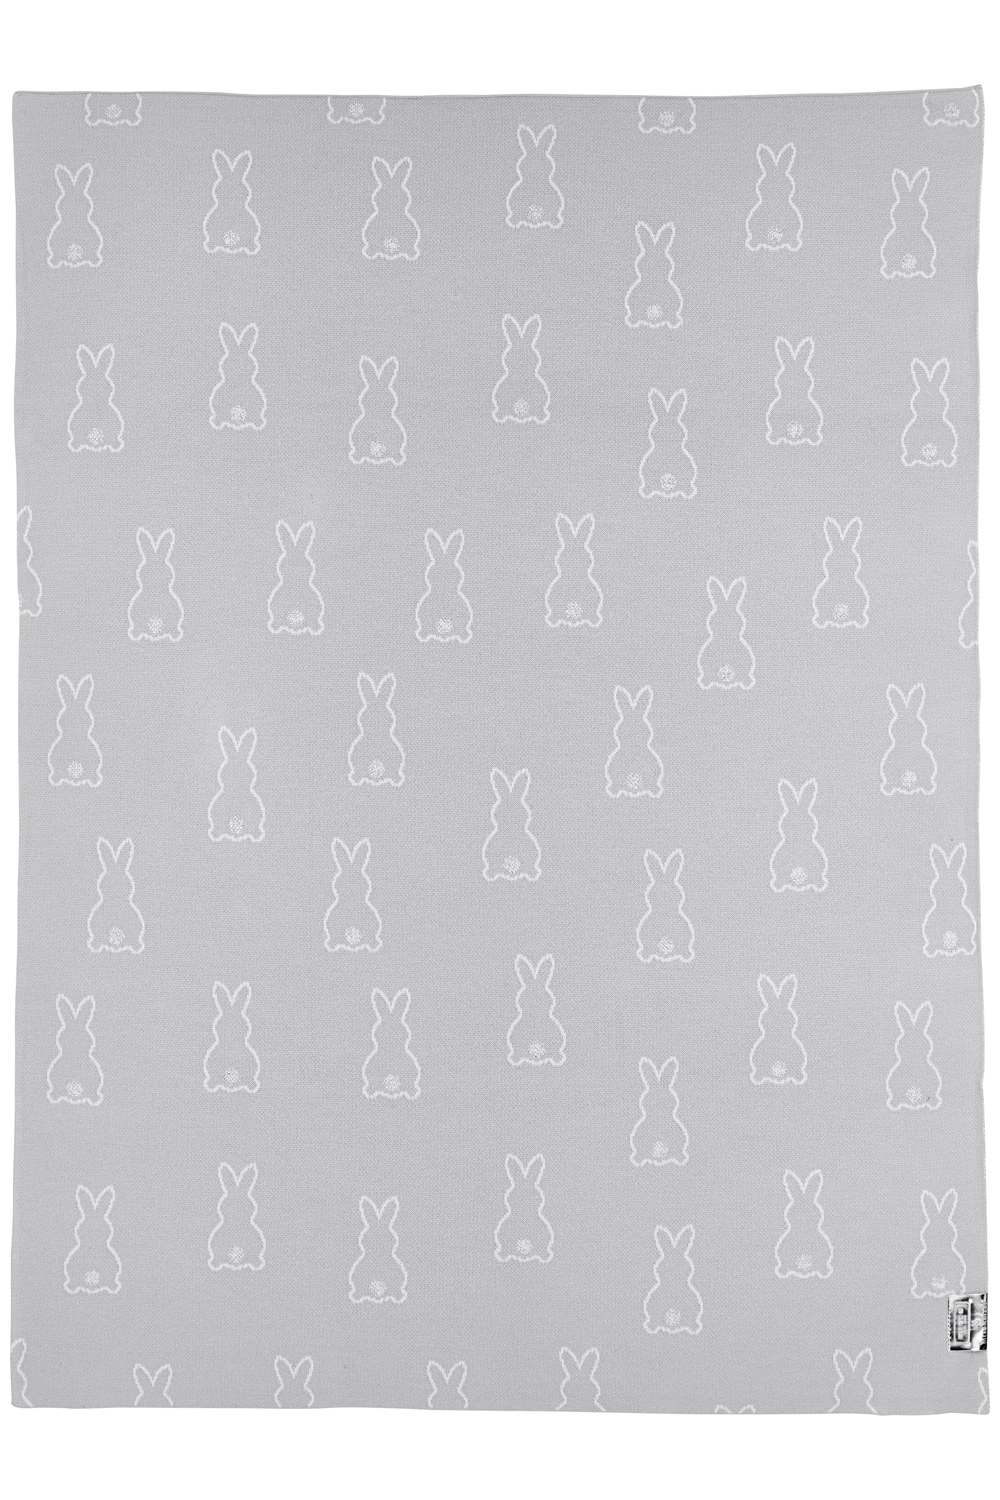 Ledikant deken Rabbit - silver - 100x150cm